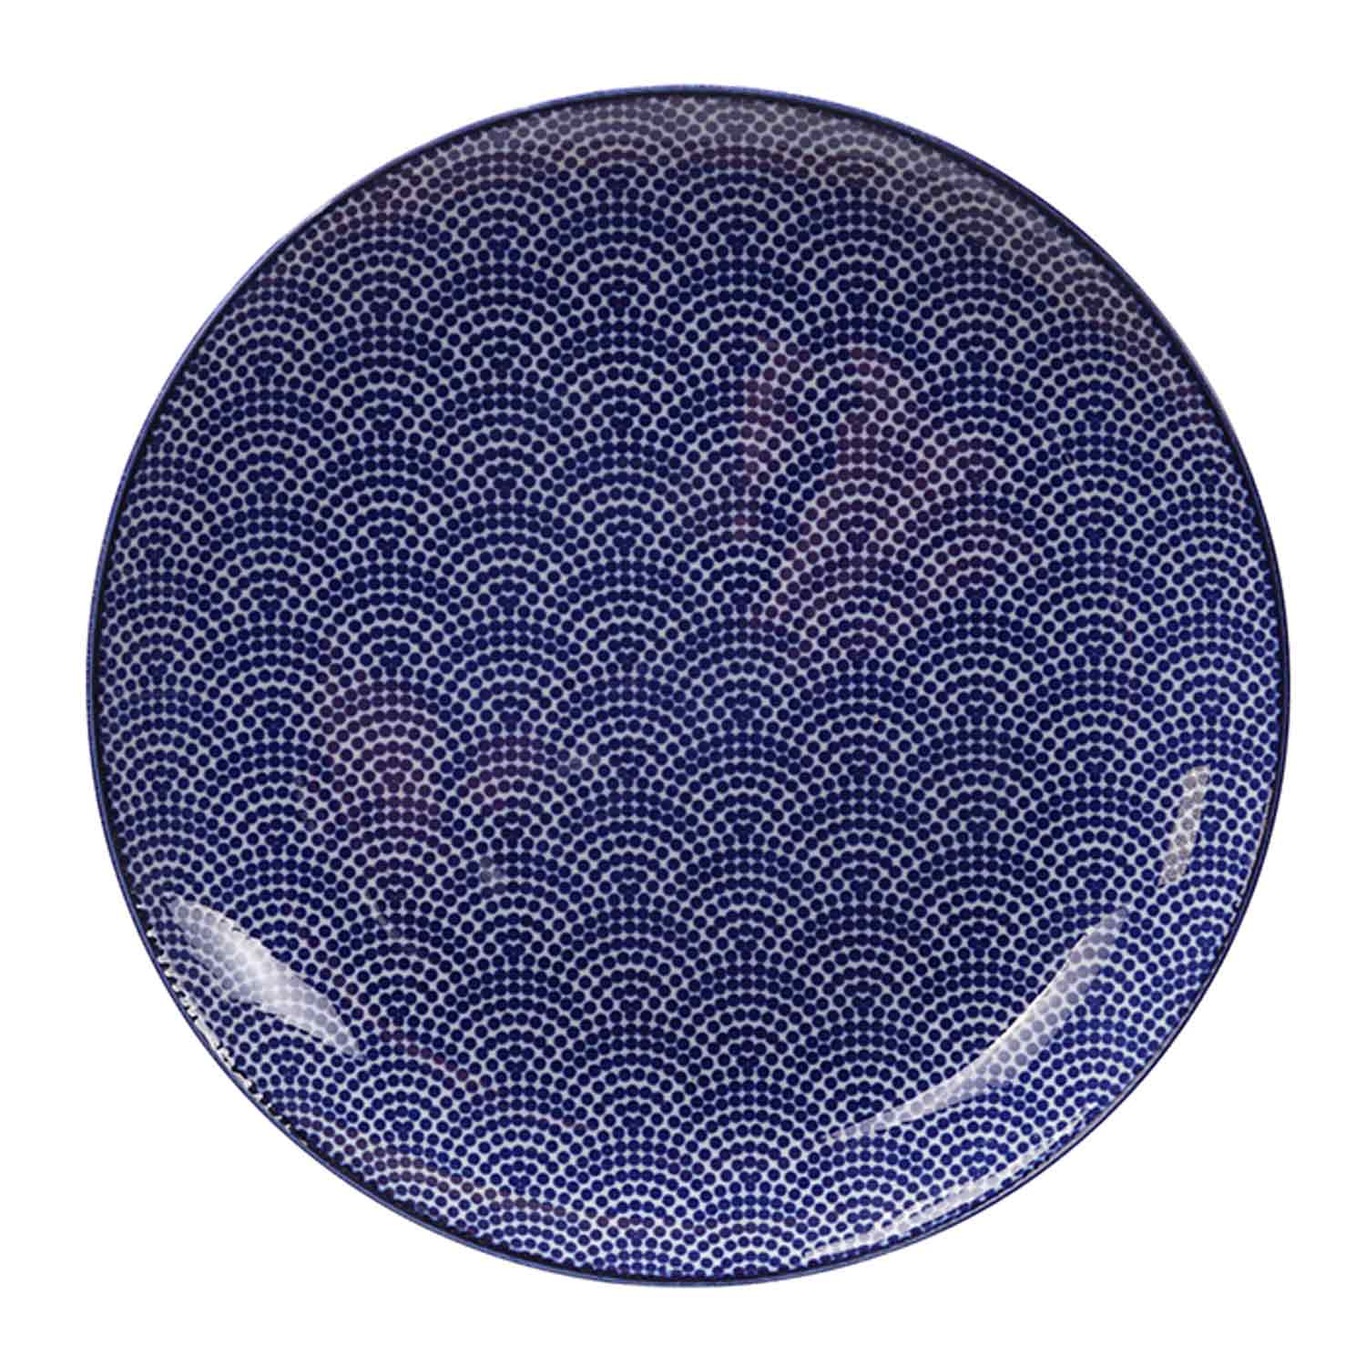 Nippon Blue Plate 25,7 cm, Dots